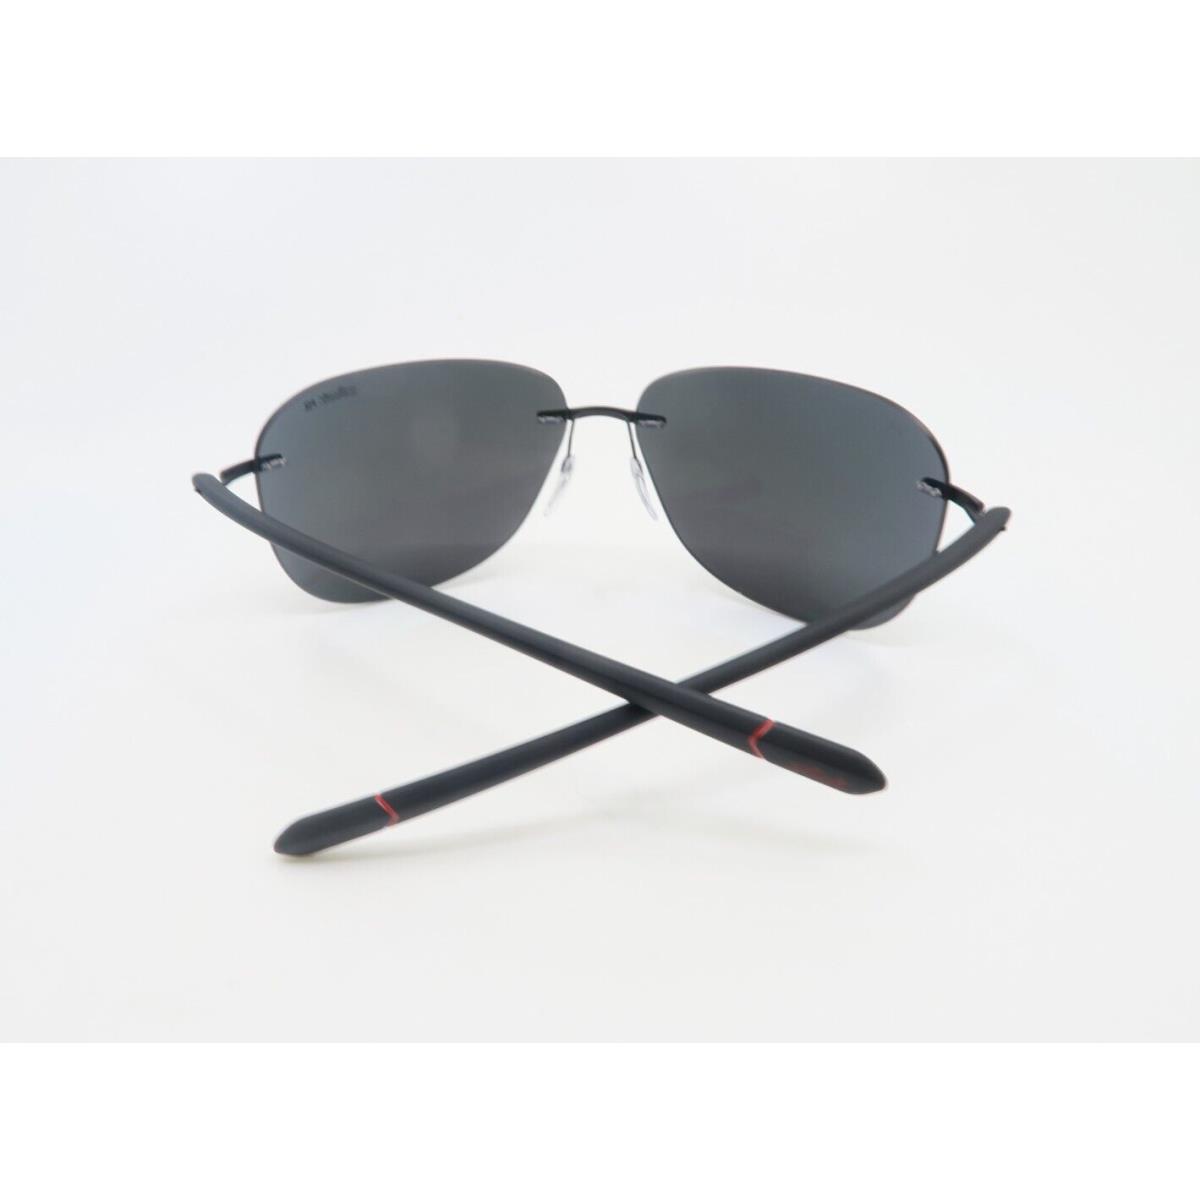 Silhouette sunglasses BAYSIDE - Black Frame, Gray Lens